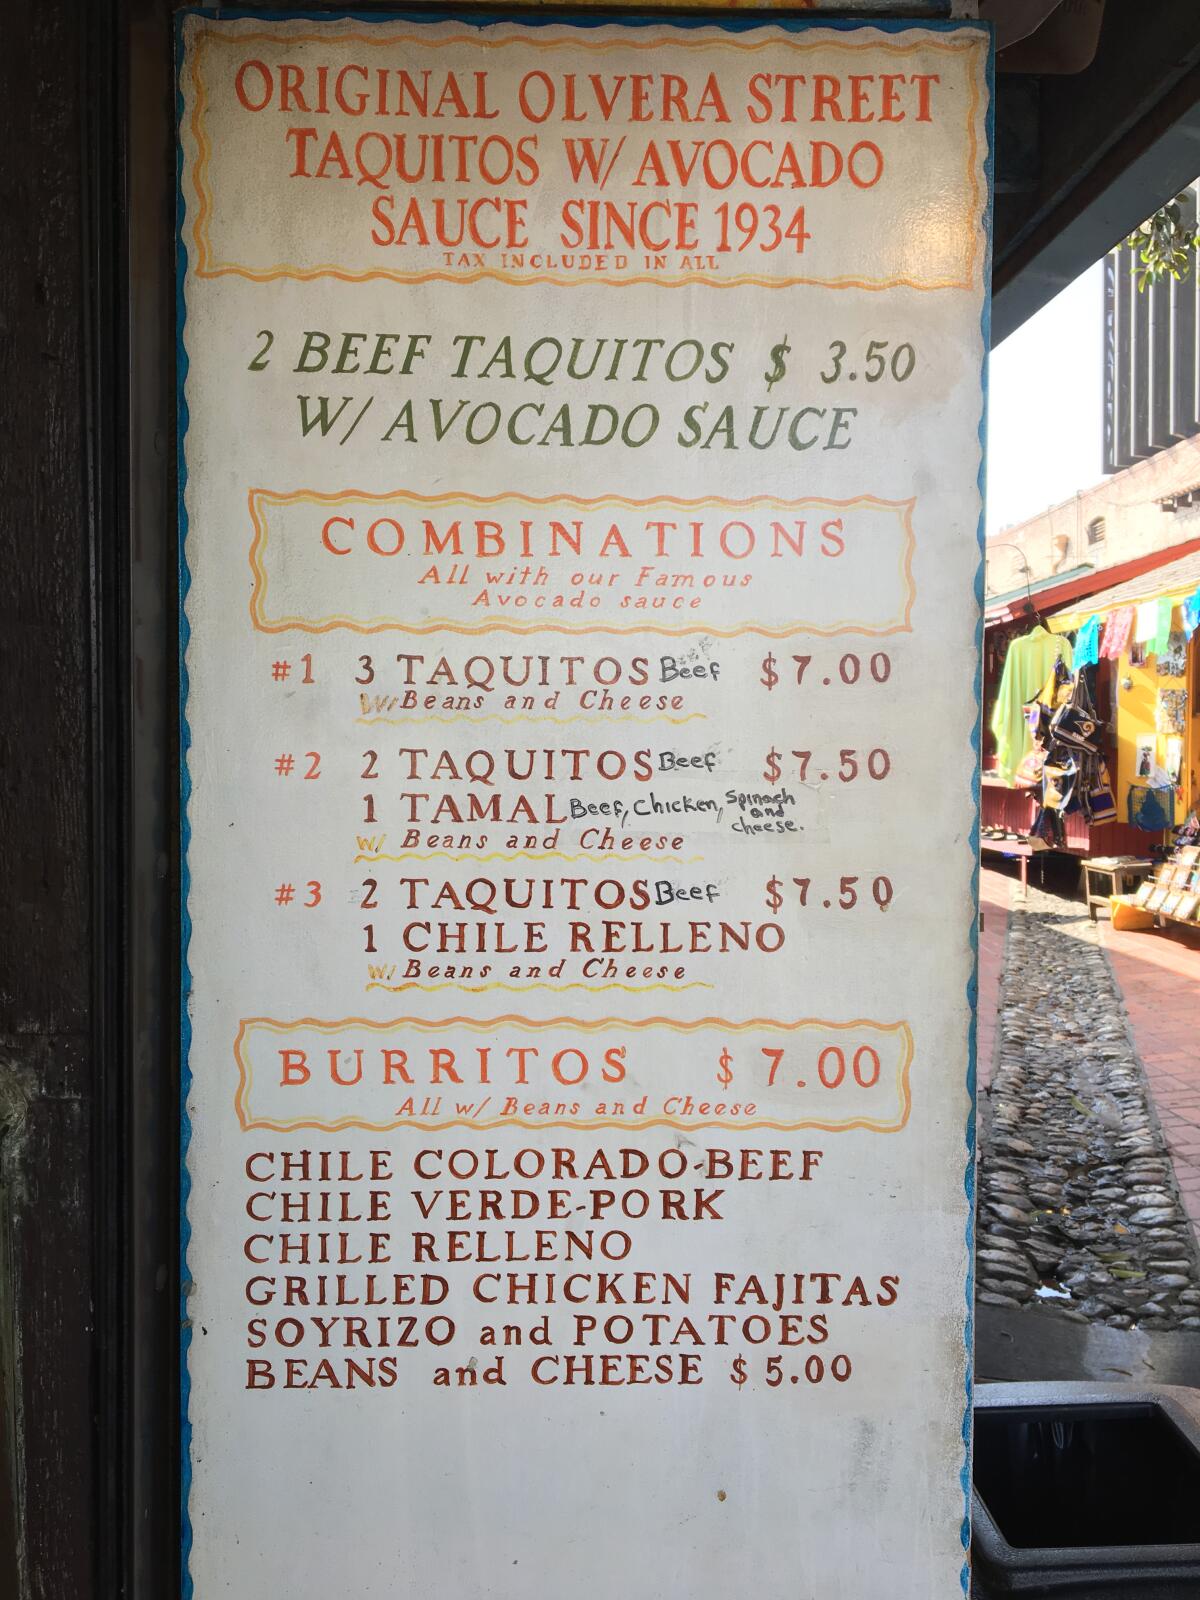 The menu sign at Cielito Lindo's Olvera Street location